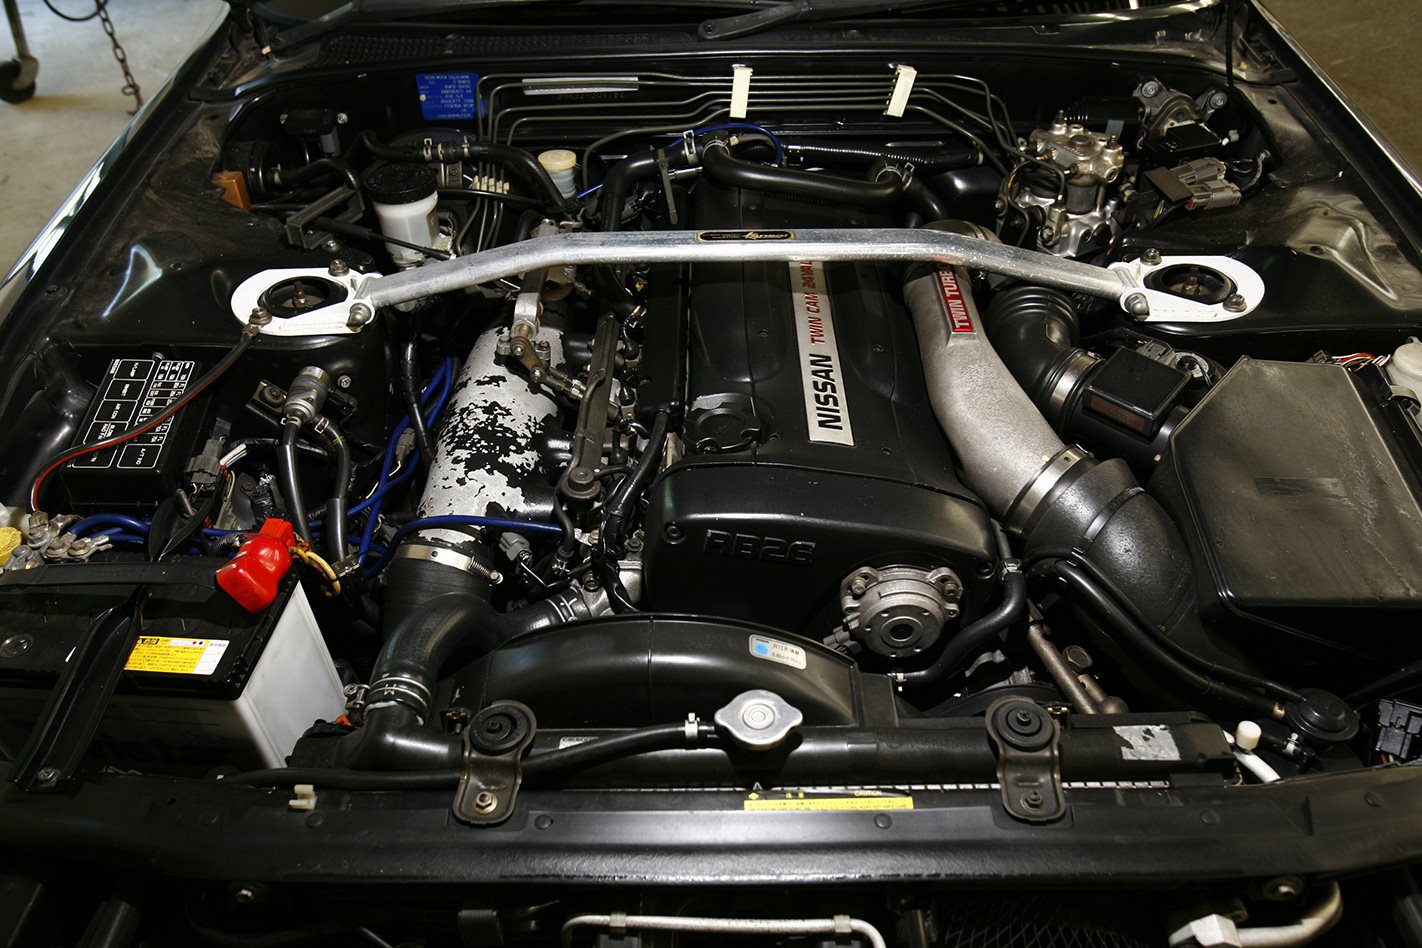 R32 Motor